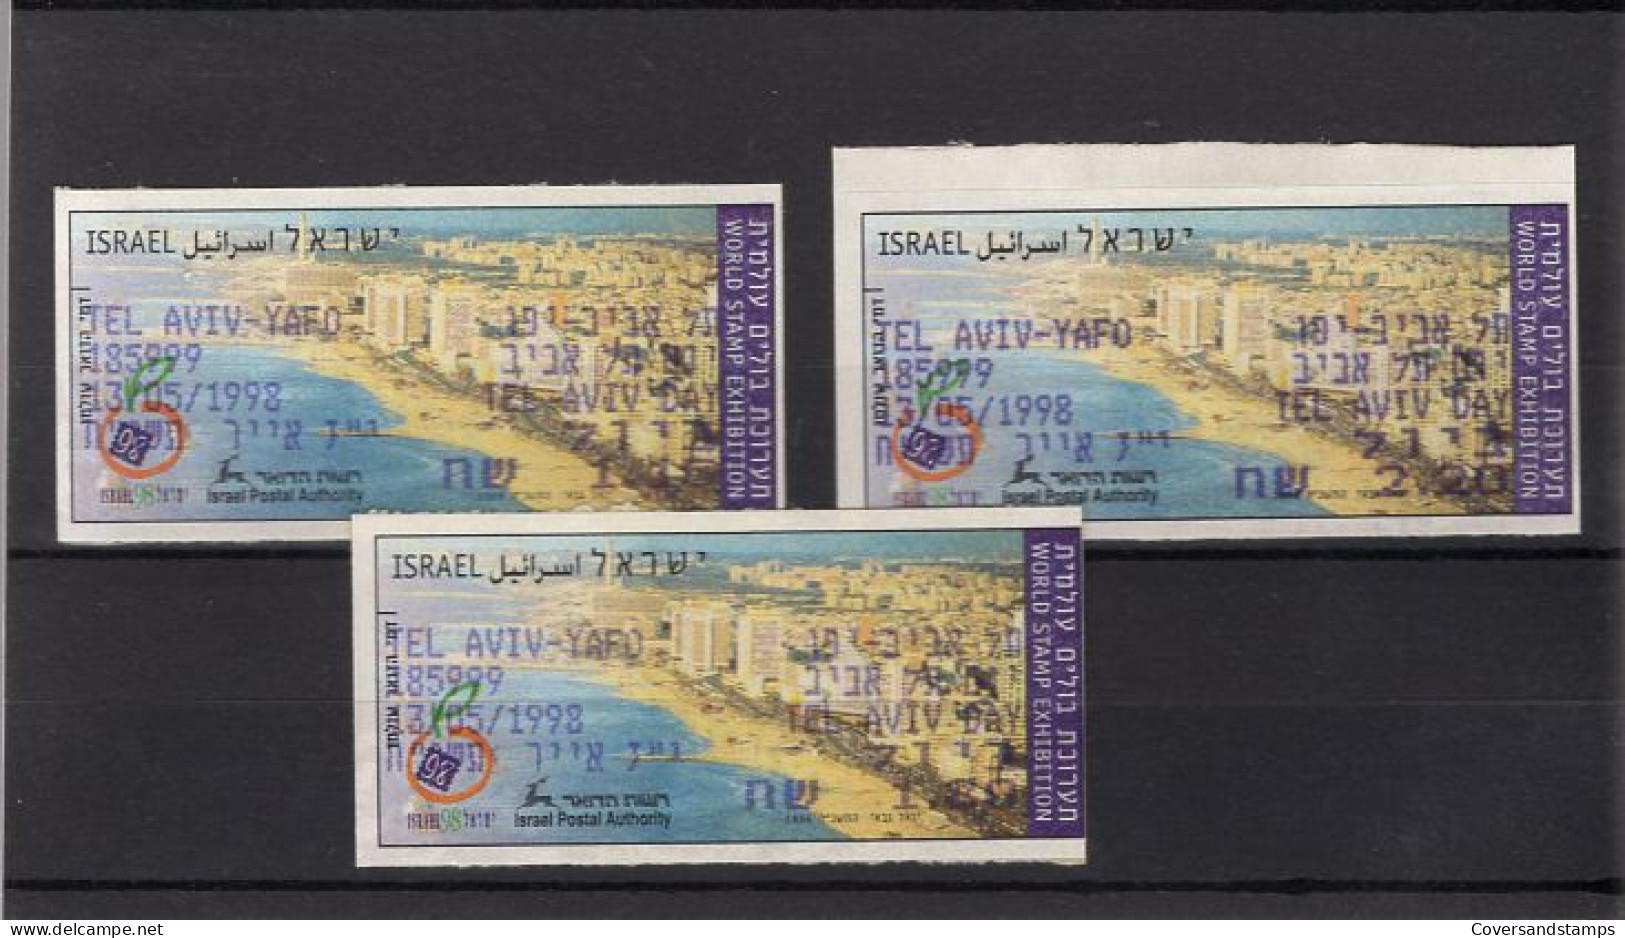  Israêl - World Stamp Exhibition Tel Aviv-Yafo 1998 ** MNH - Automatenmarken (Frama)